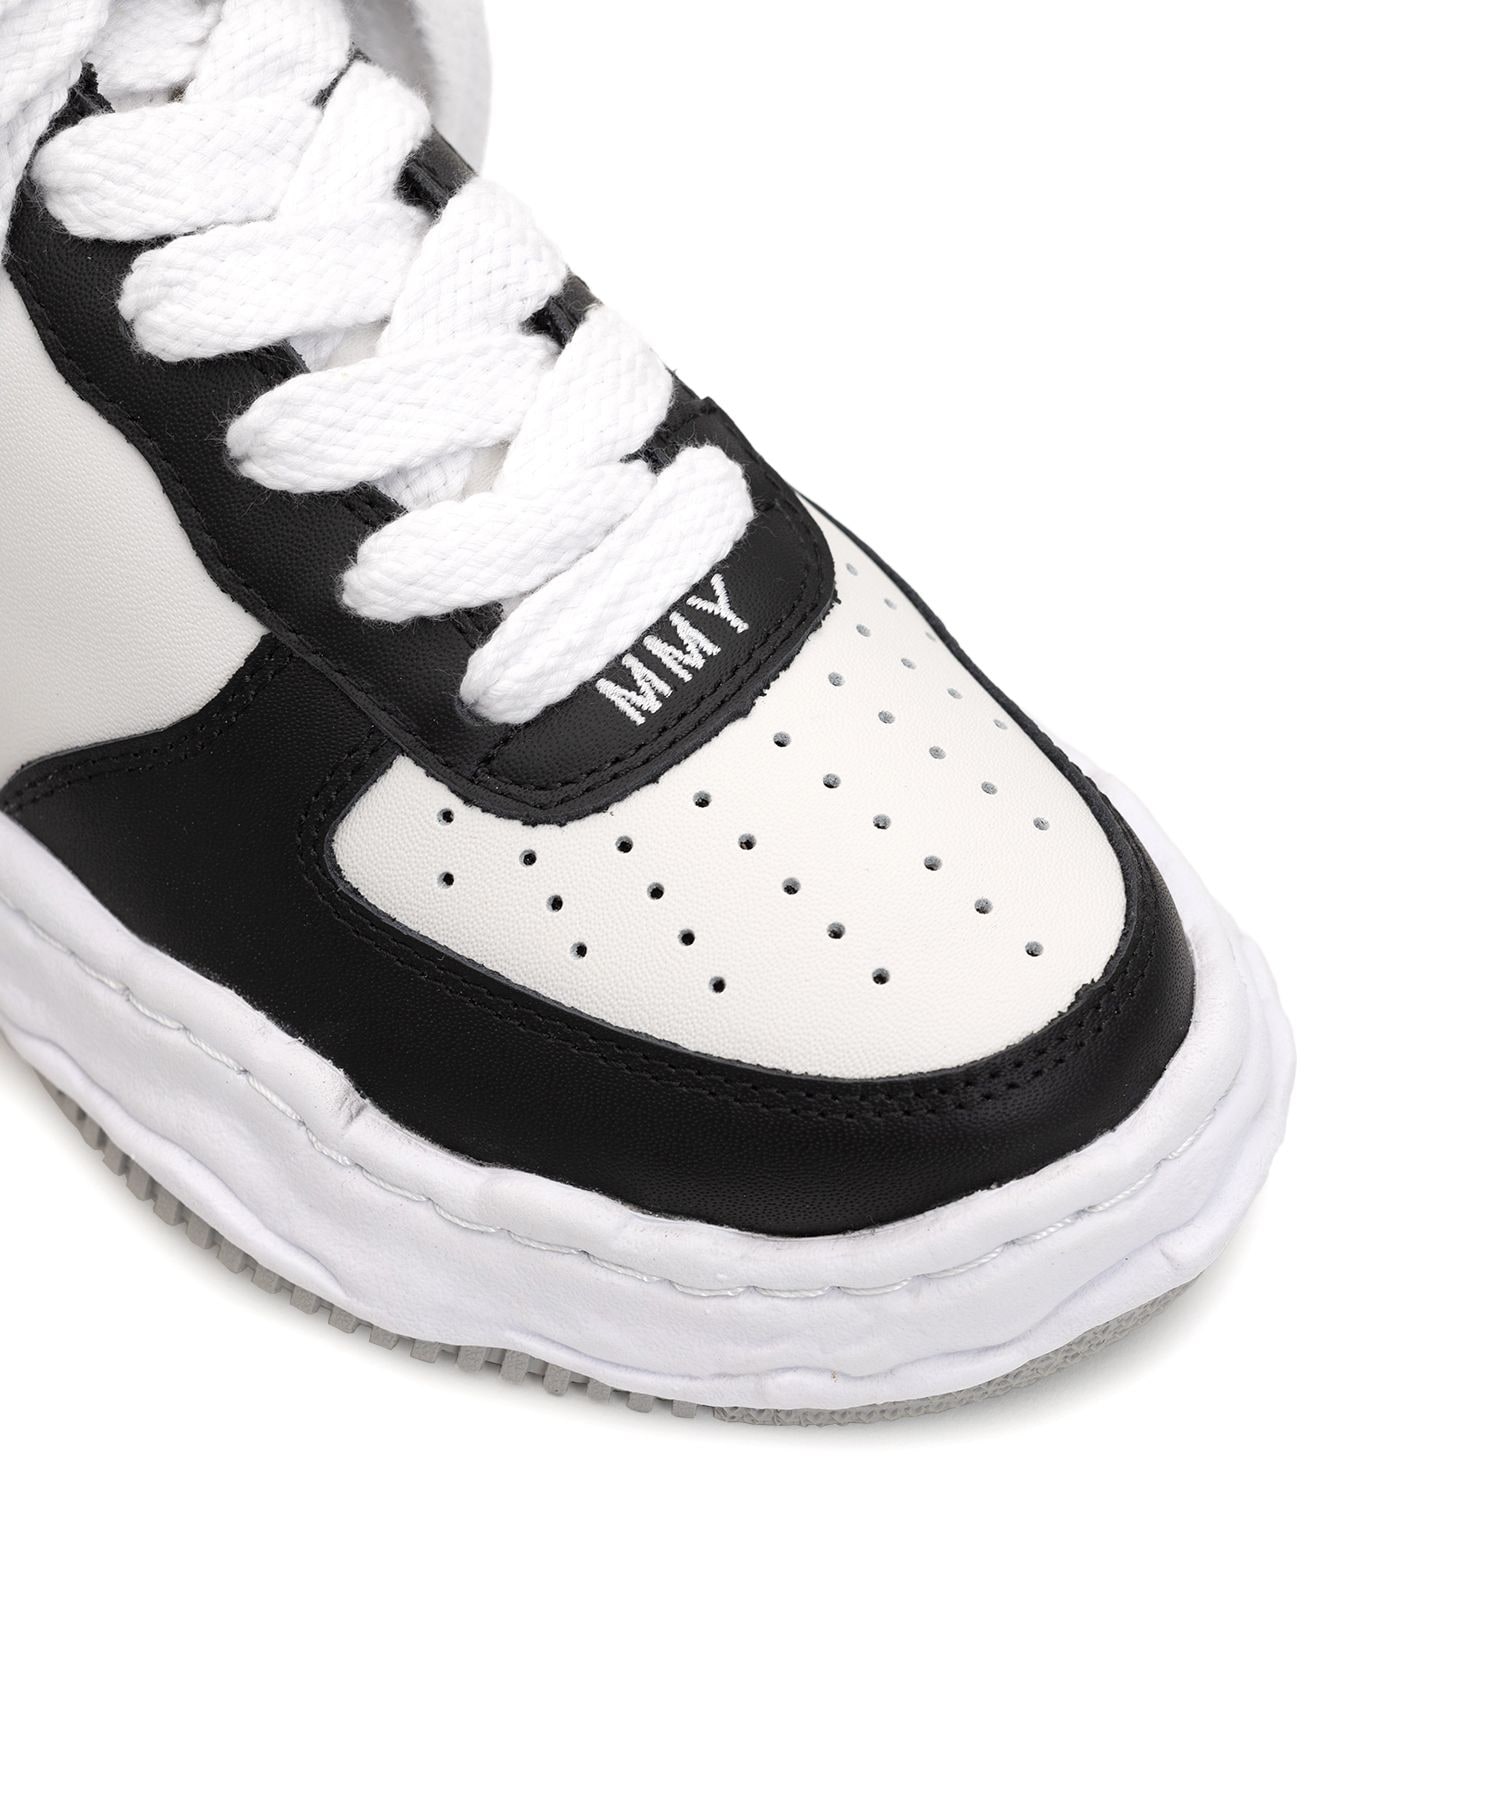 WAYNE Low original sole leather Low-Top sneakers(36 BLACK): Maison 